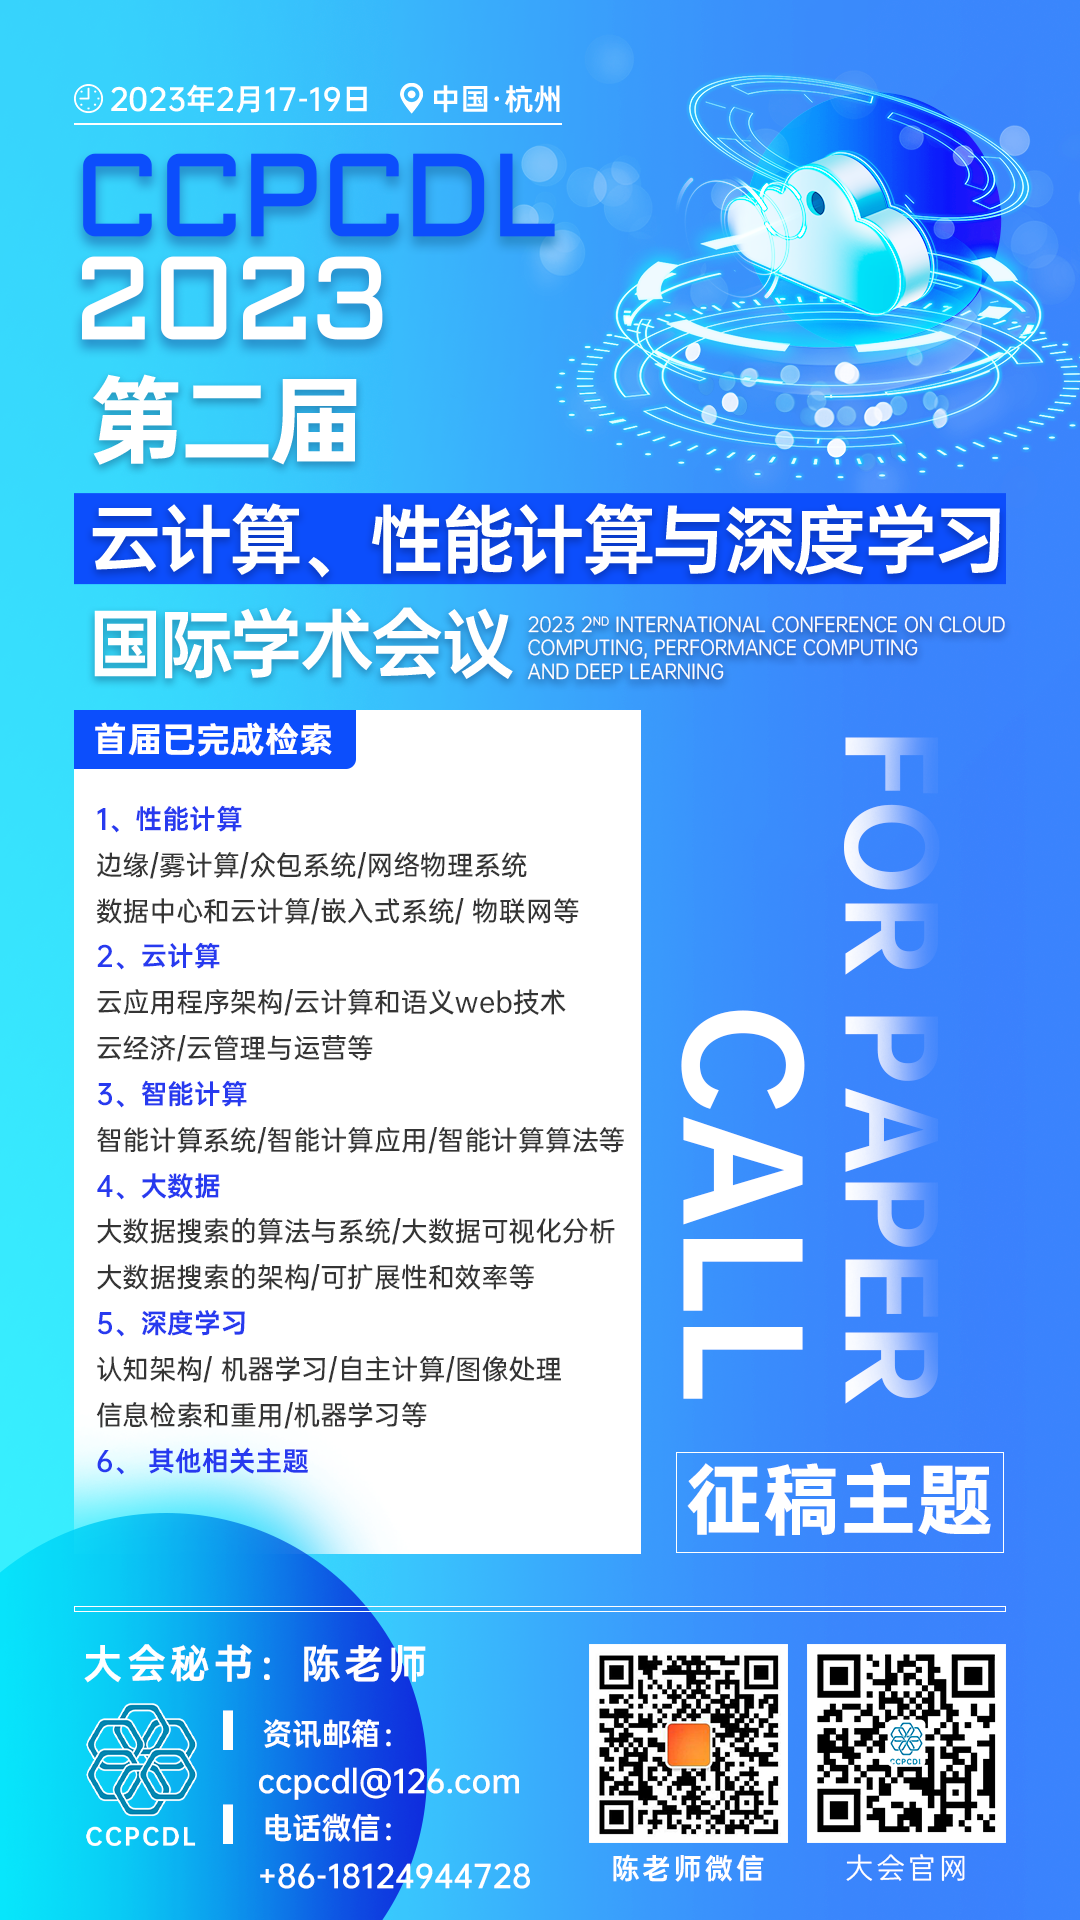 3月杭州-CCPCDL 2023-会议宣传海报-20221125.png